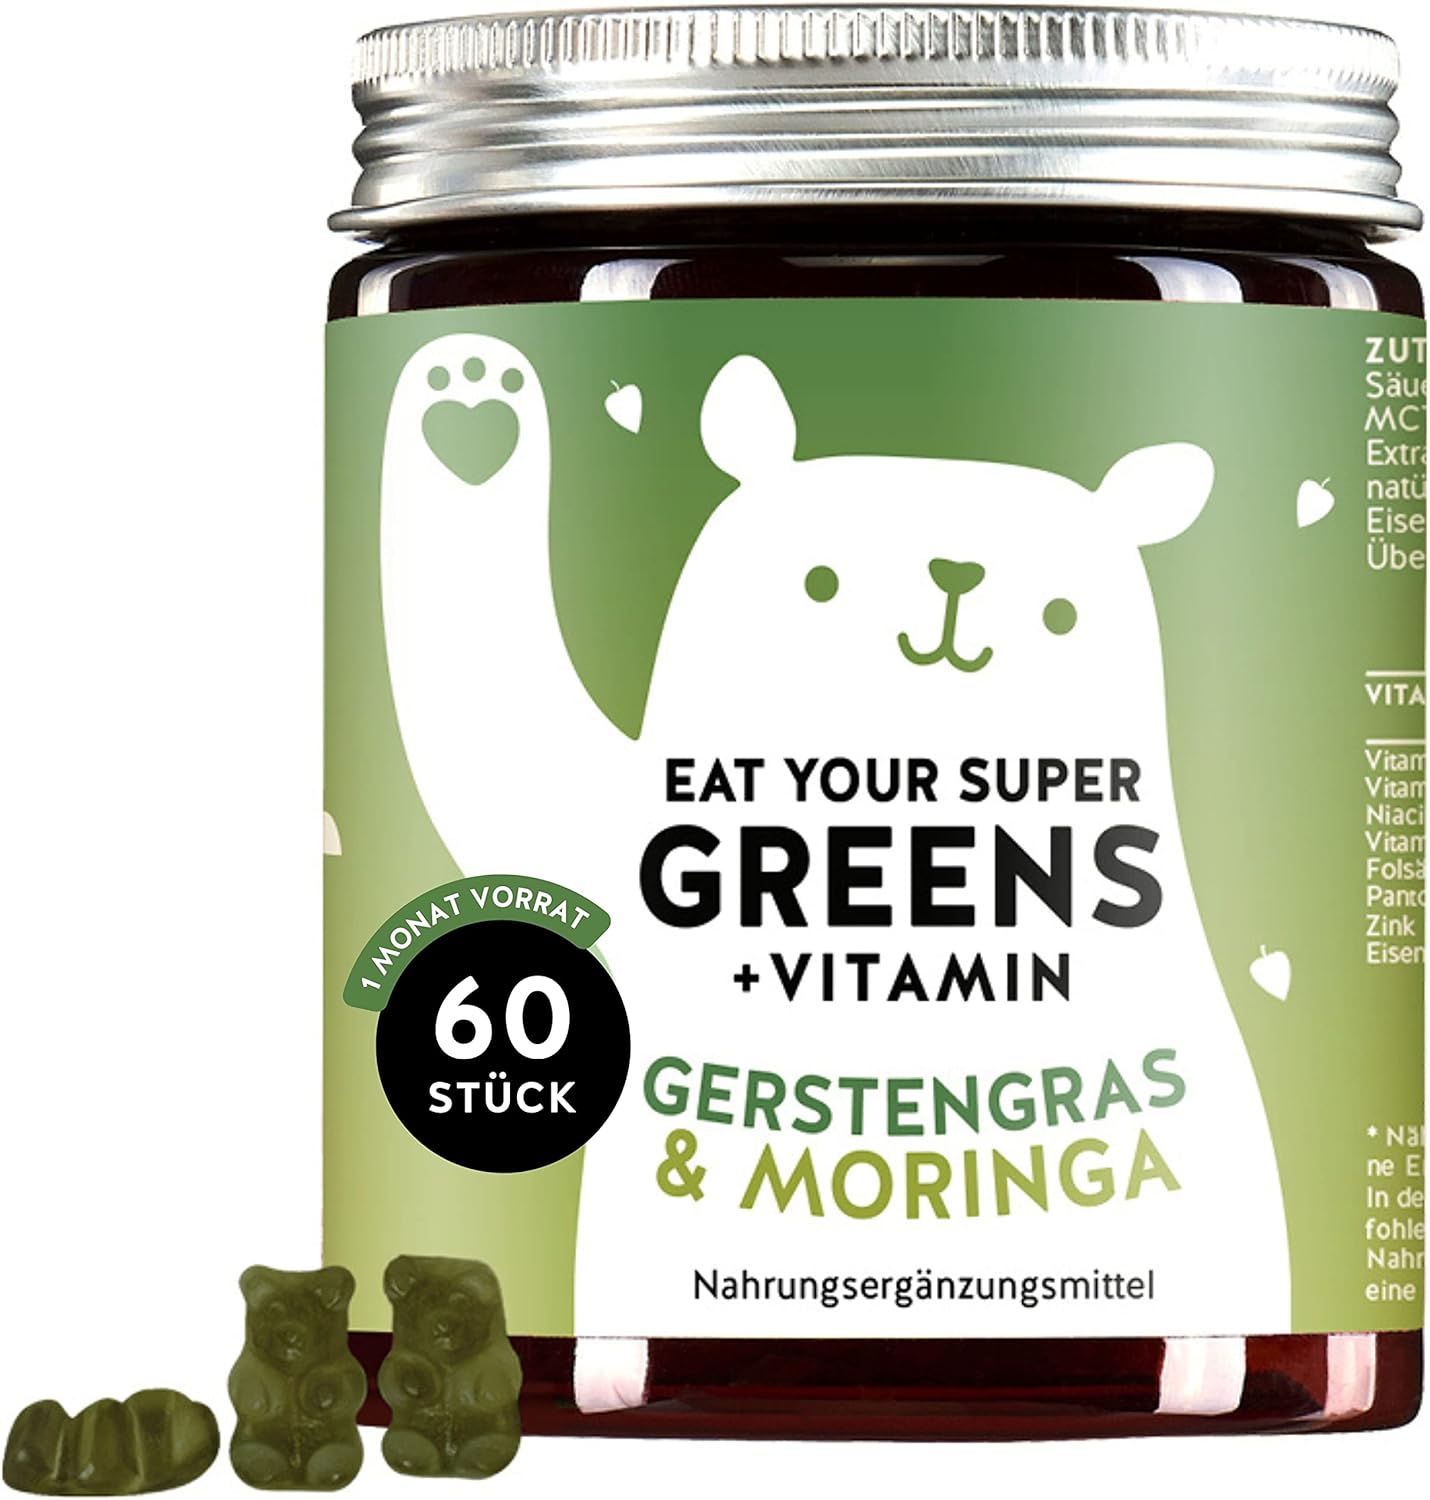 Bears with Benefits Eat Your Super Greens + Vitamin | Gerstengras & Moringa | 60 Stück